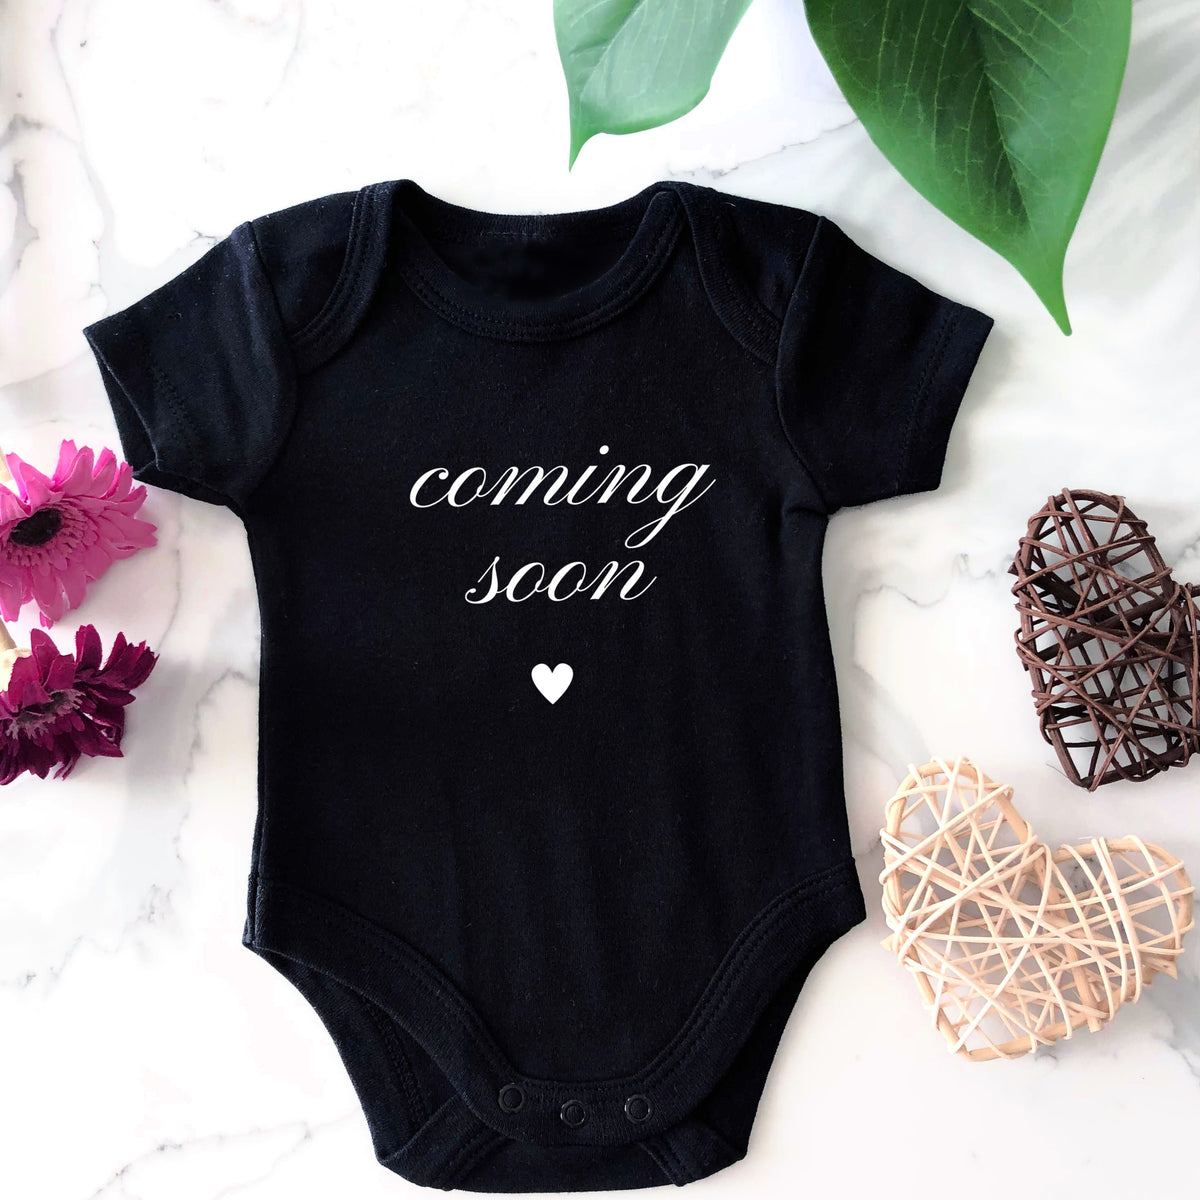 Pregnancy Announcement Baby Onesie - Coming Soon Baby Suit - Baby Reveal